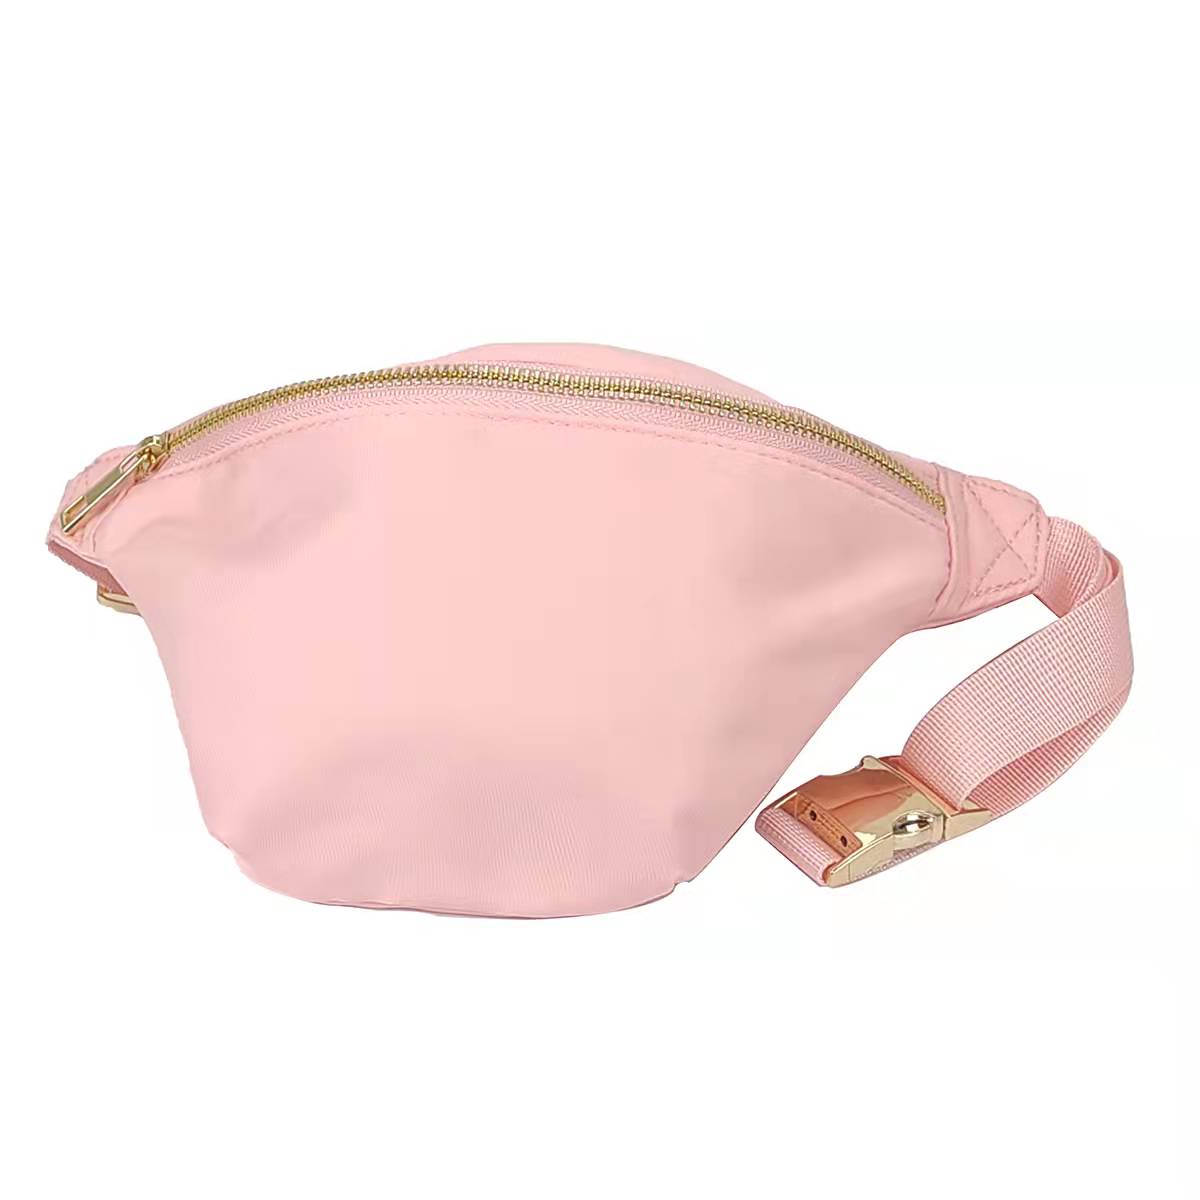 Men Women Sports Fanny Pack Belt Bag Baby pink